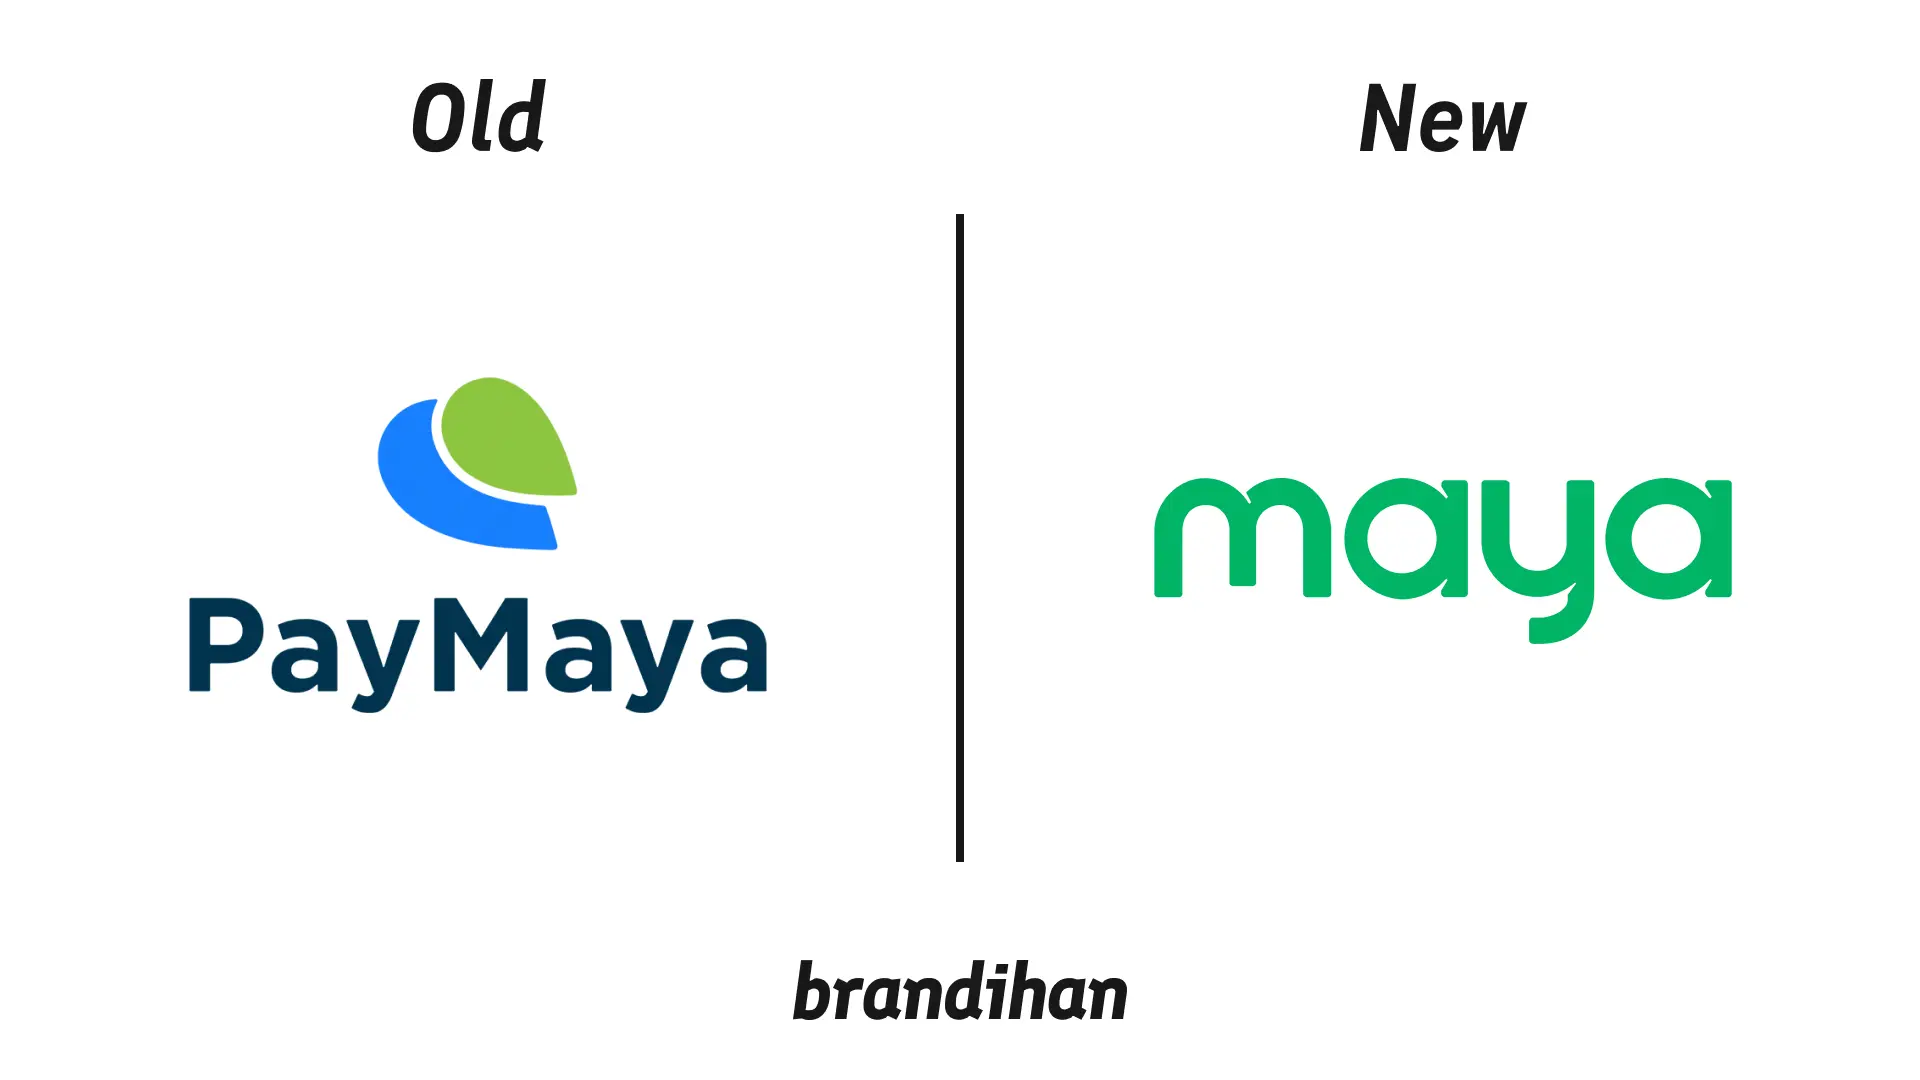 Into the Design of PayMaya's Rebrand to Maya